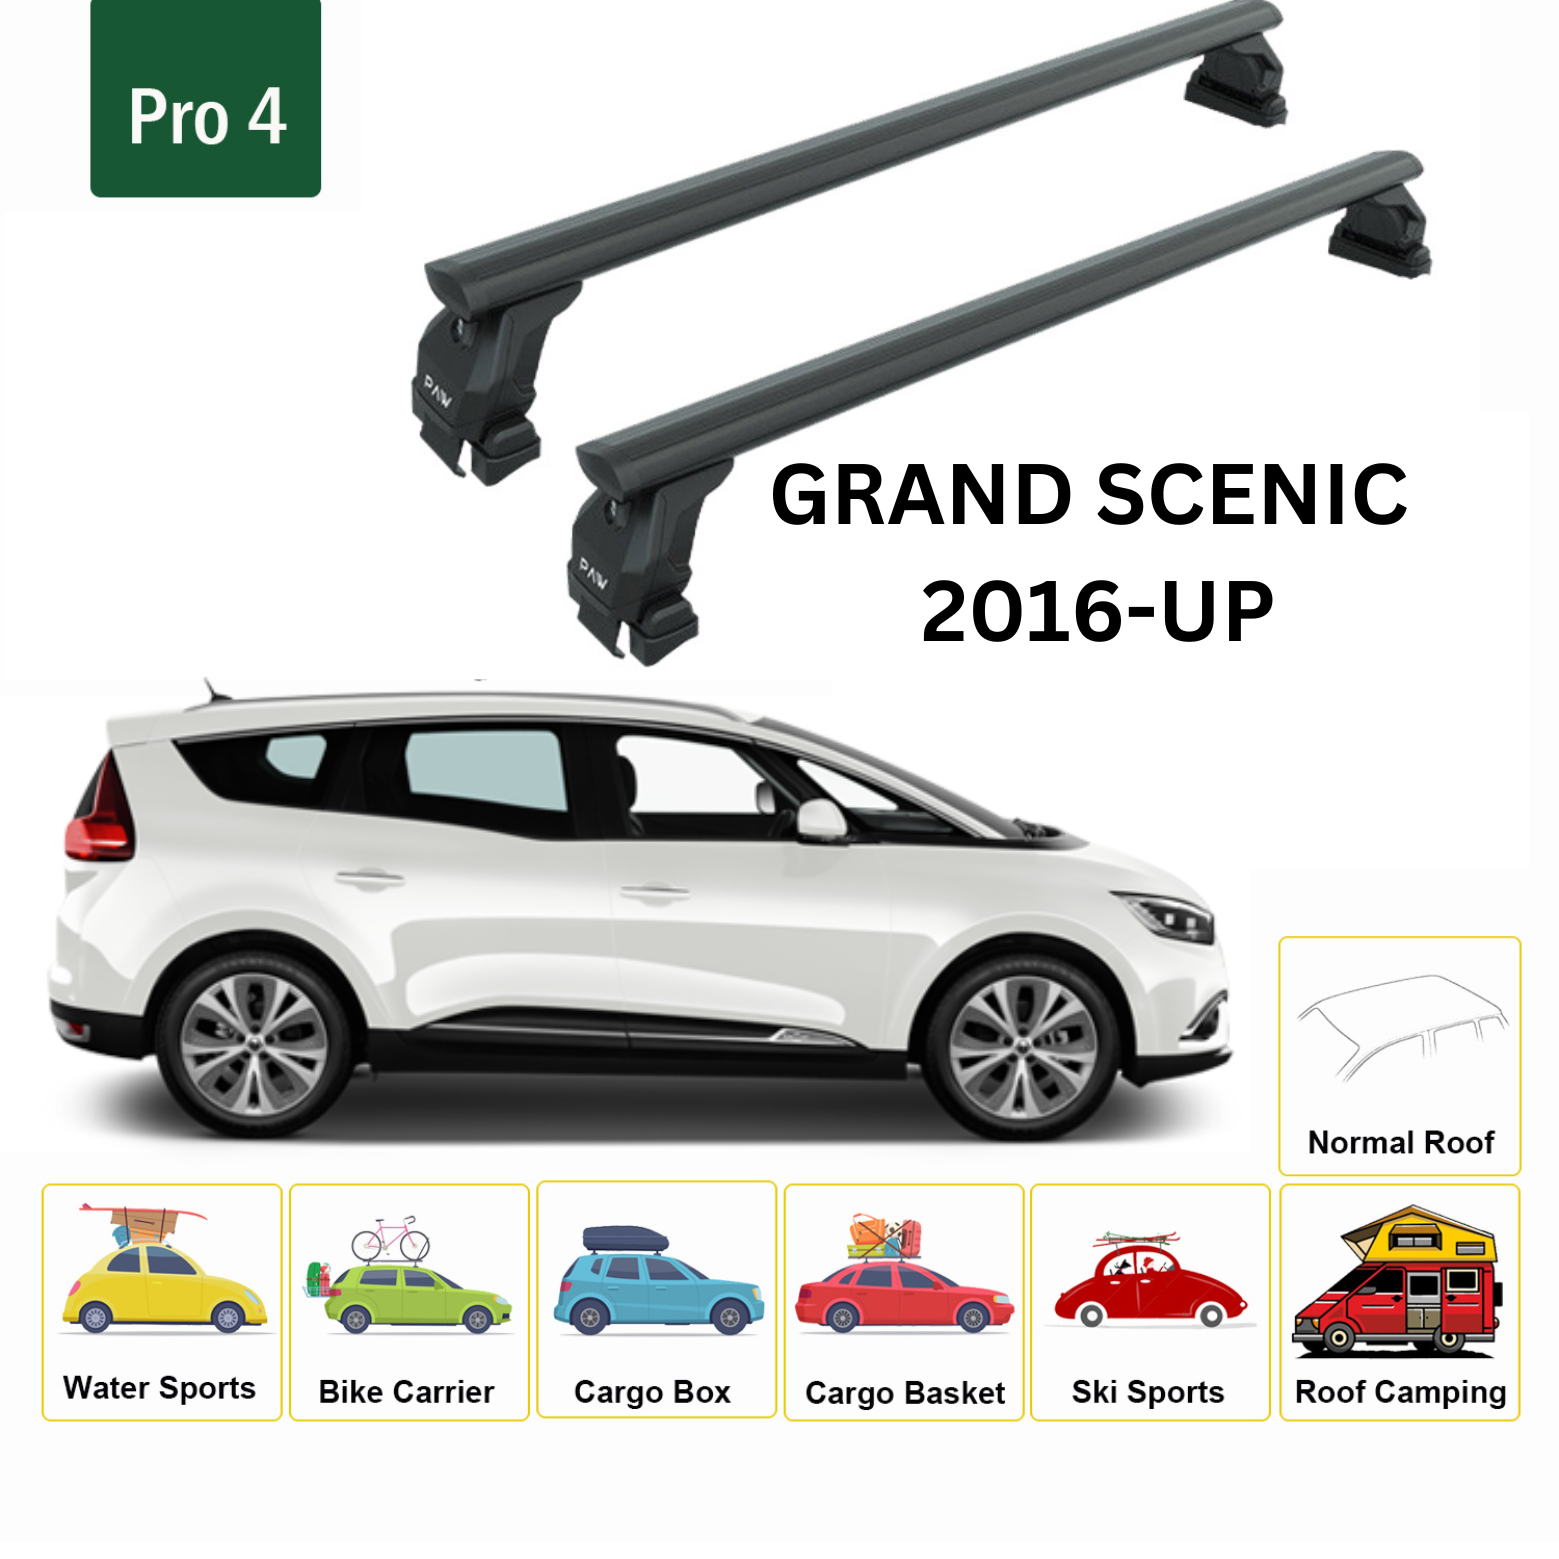 For Renault Grand Scenic 2016-Up Roof Rack System, Aluminium Cross Bar, Metal Bracket, Normal Roof, Black - 0